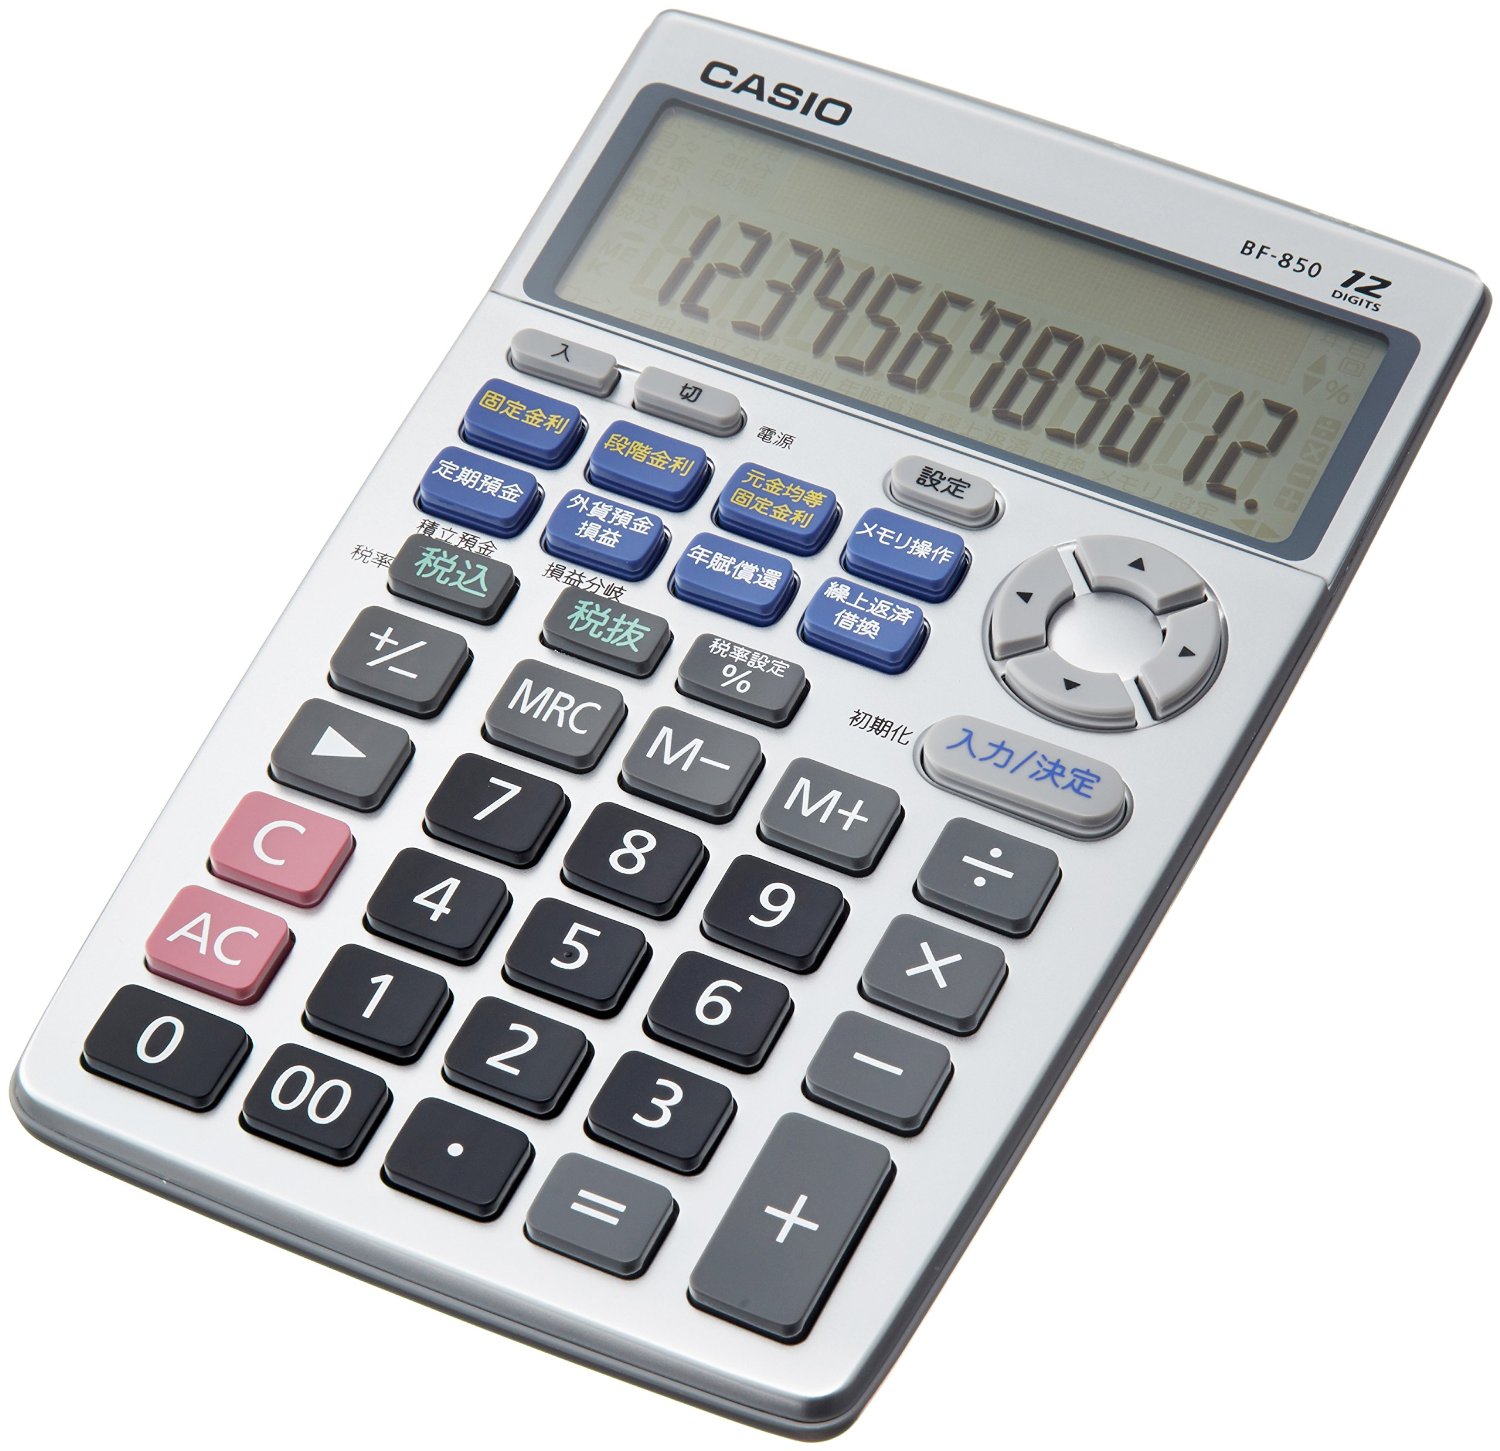 CASIO 金融電卓 12桁 BF-850-N | 電卓比較.com